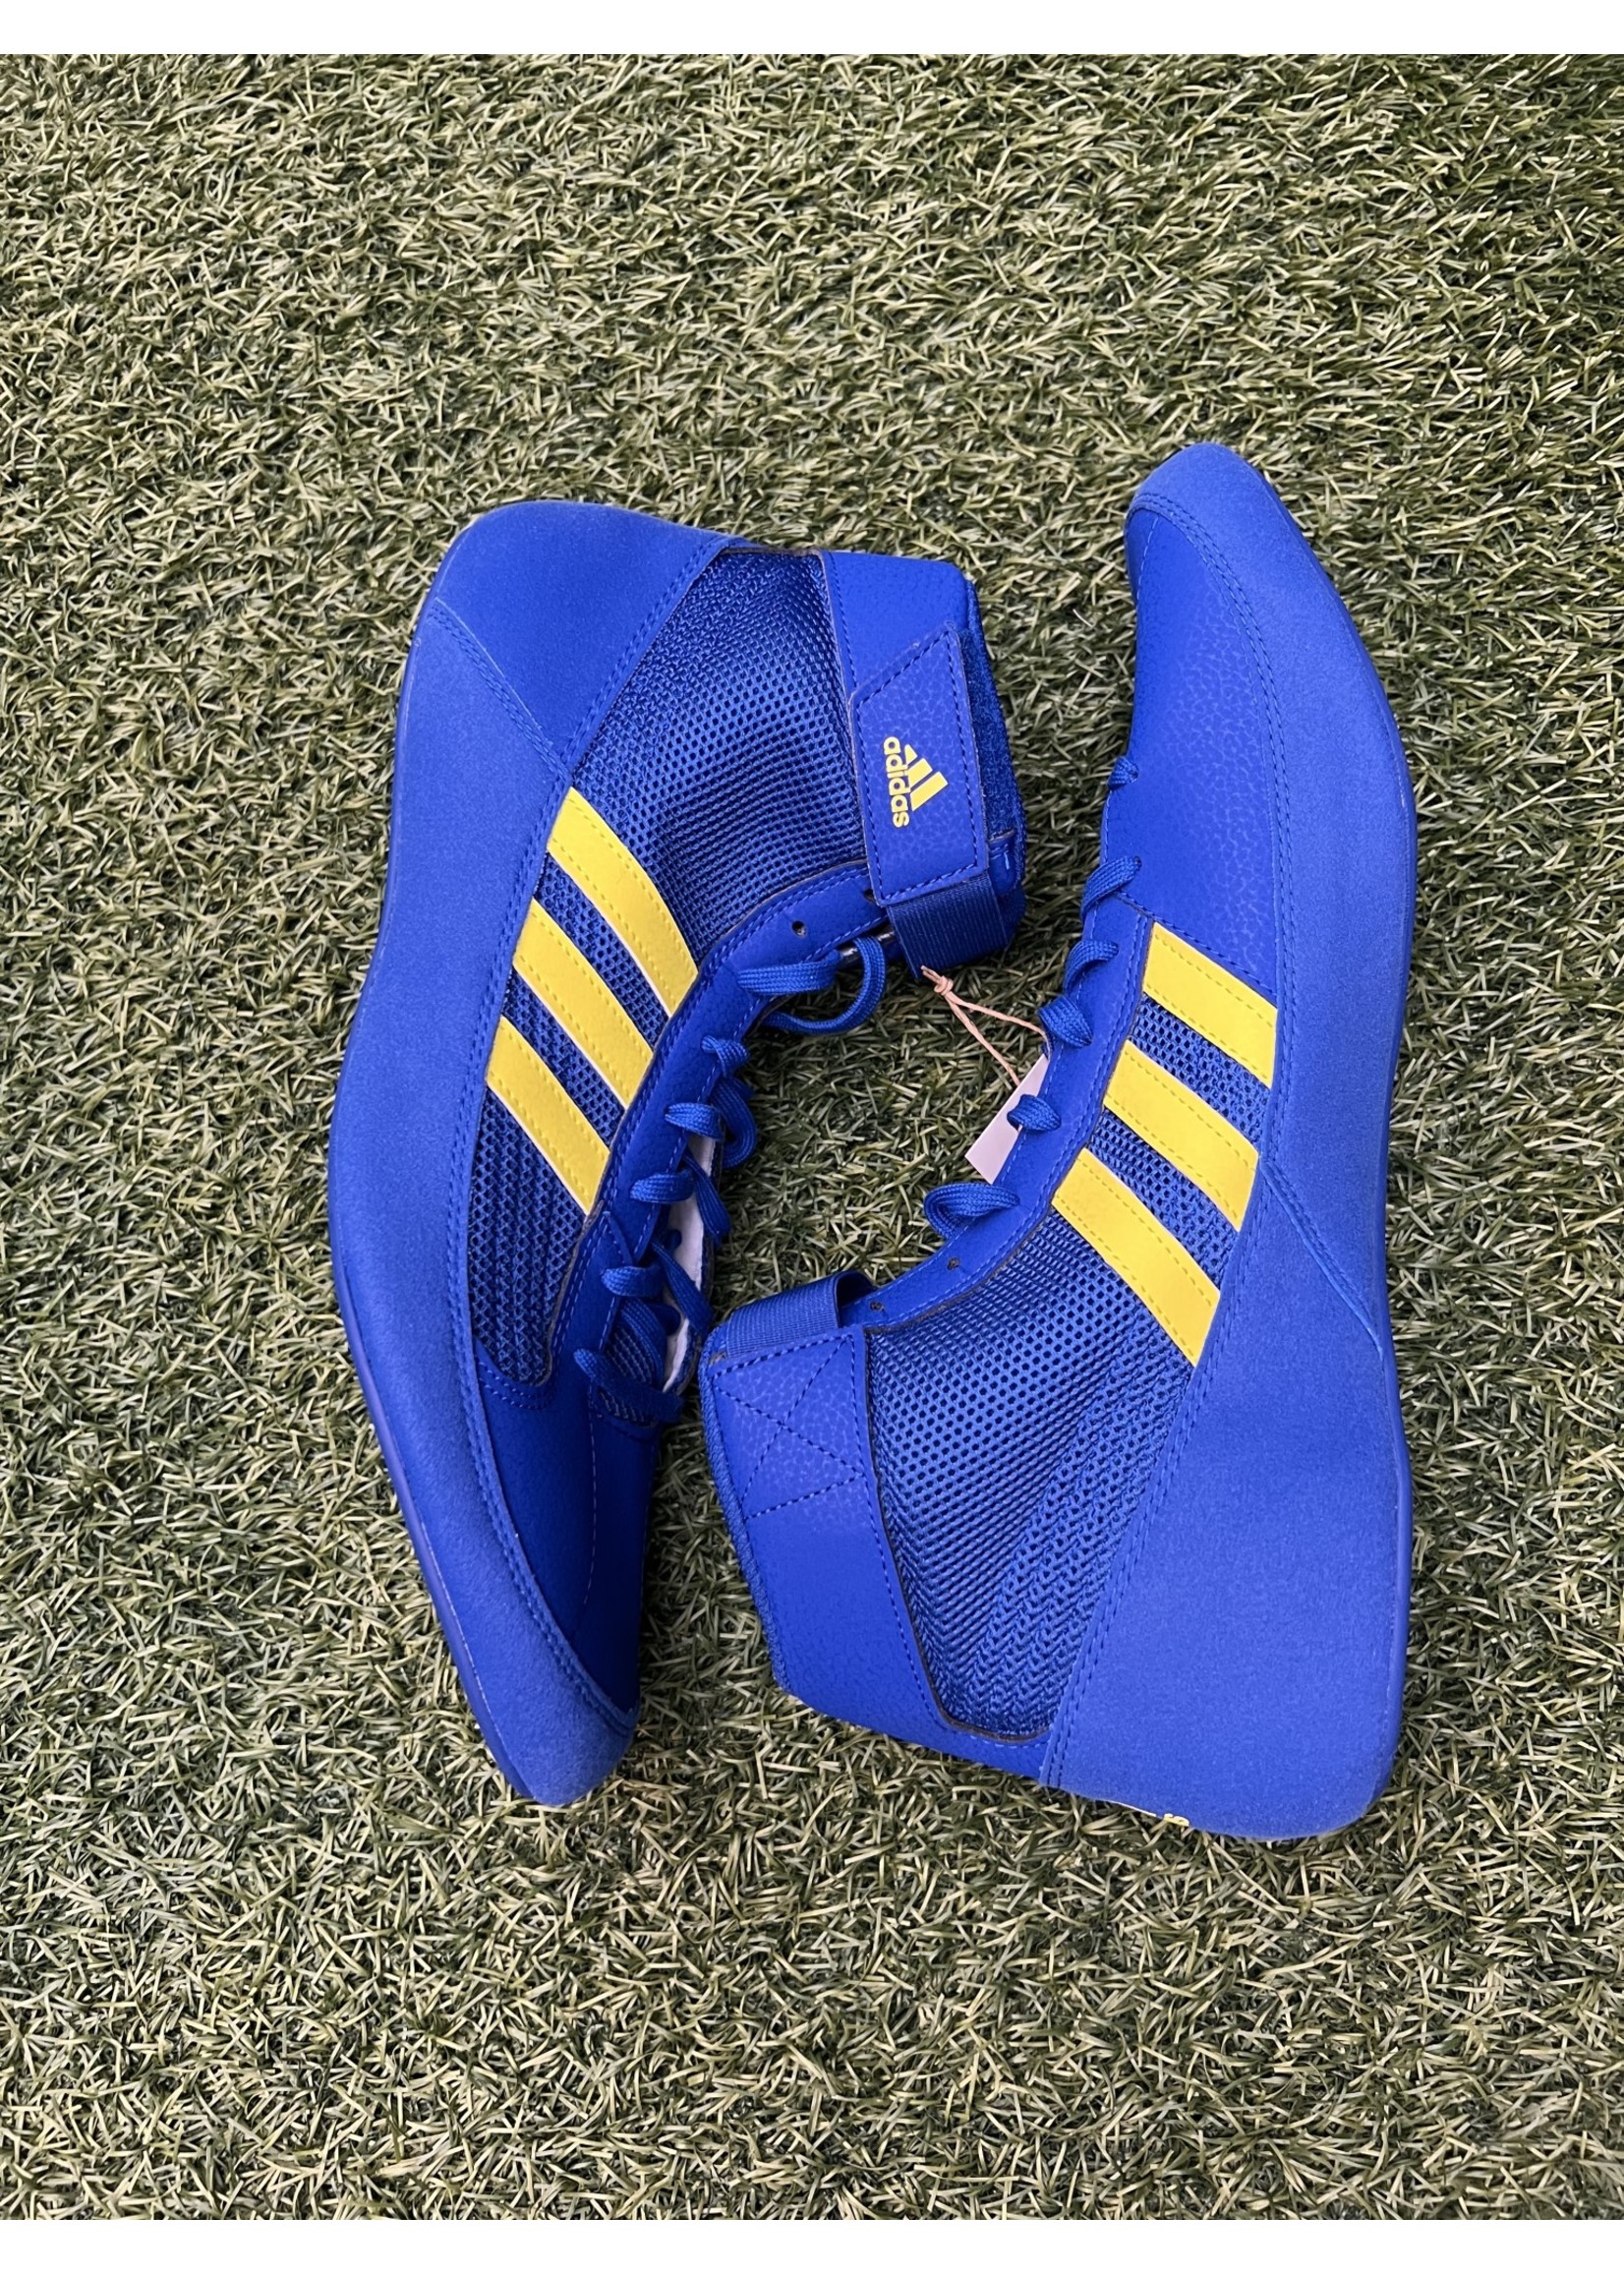 Adidas Adidas Hvc Size 14 Blue/Yellow